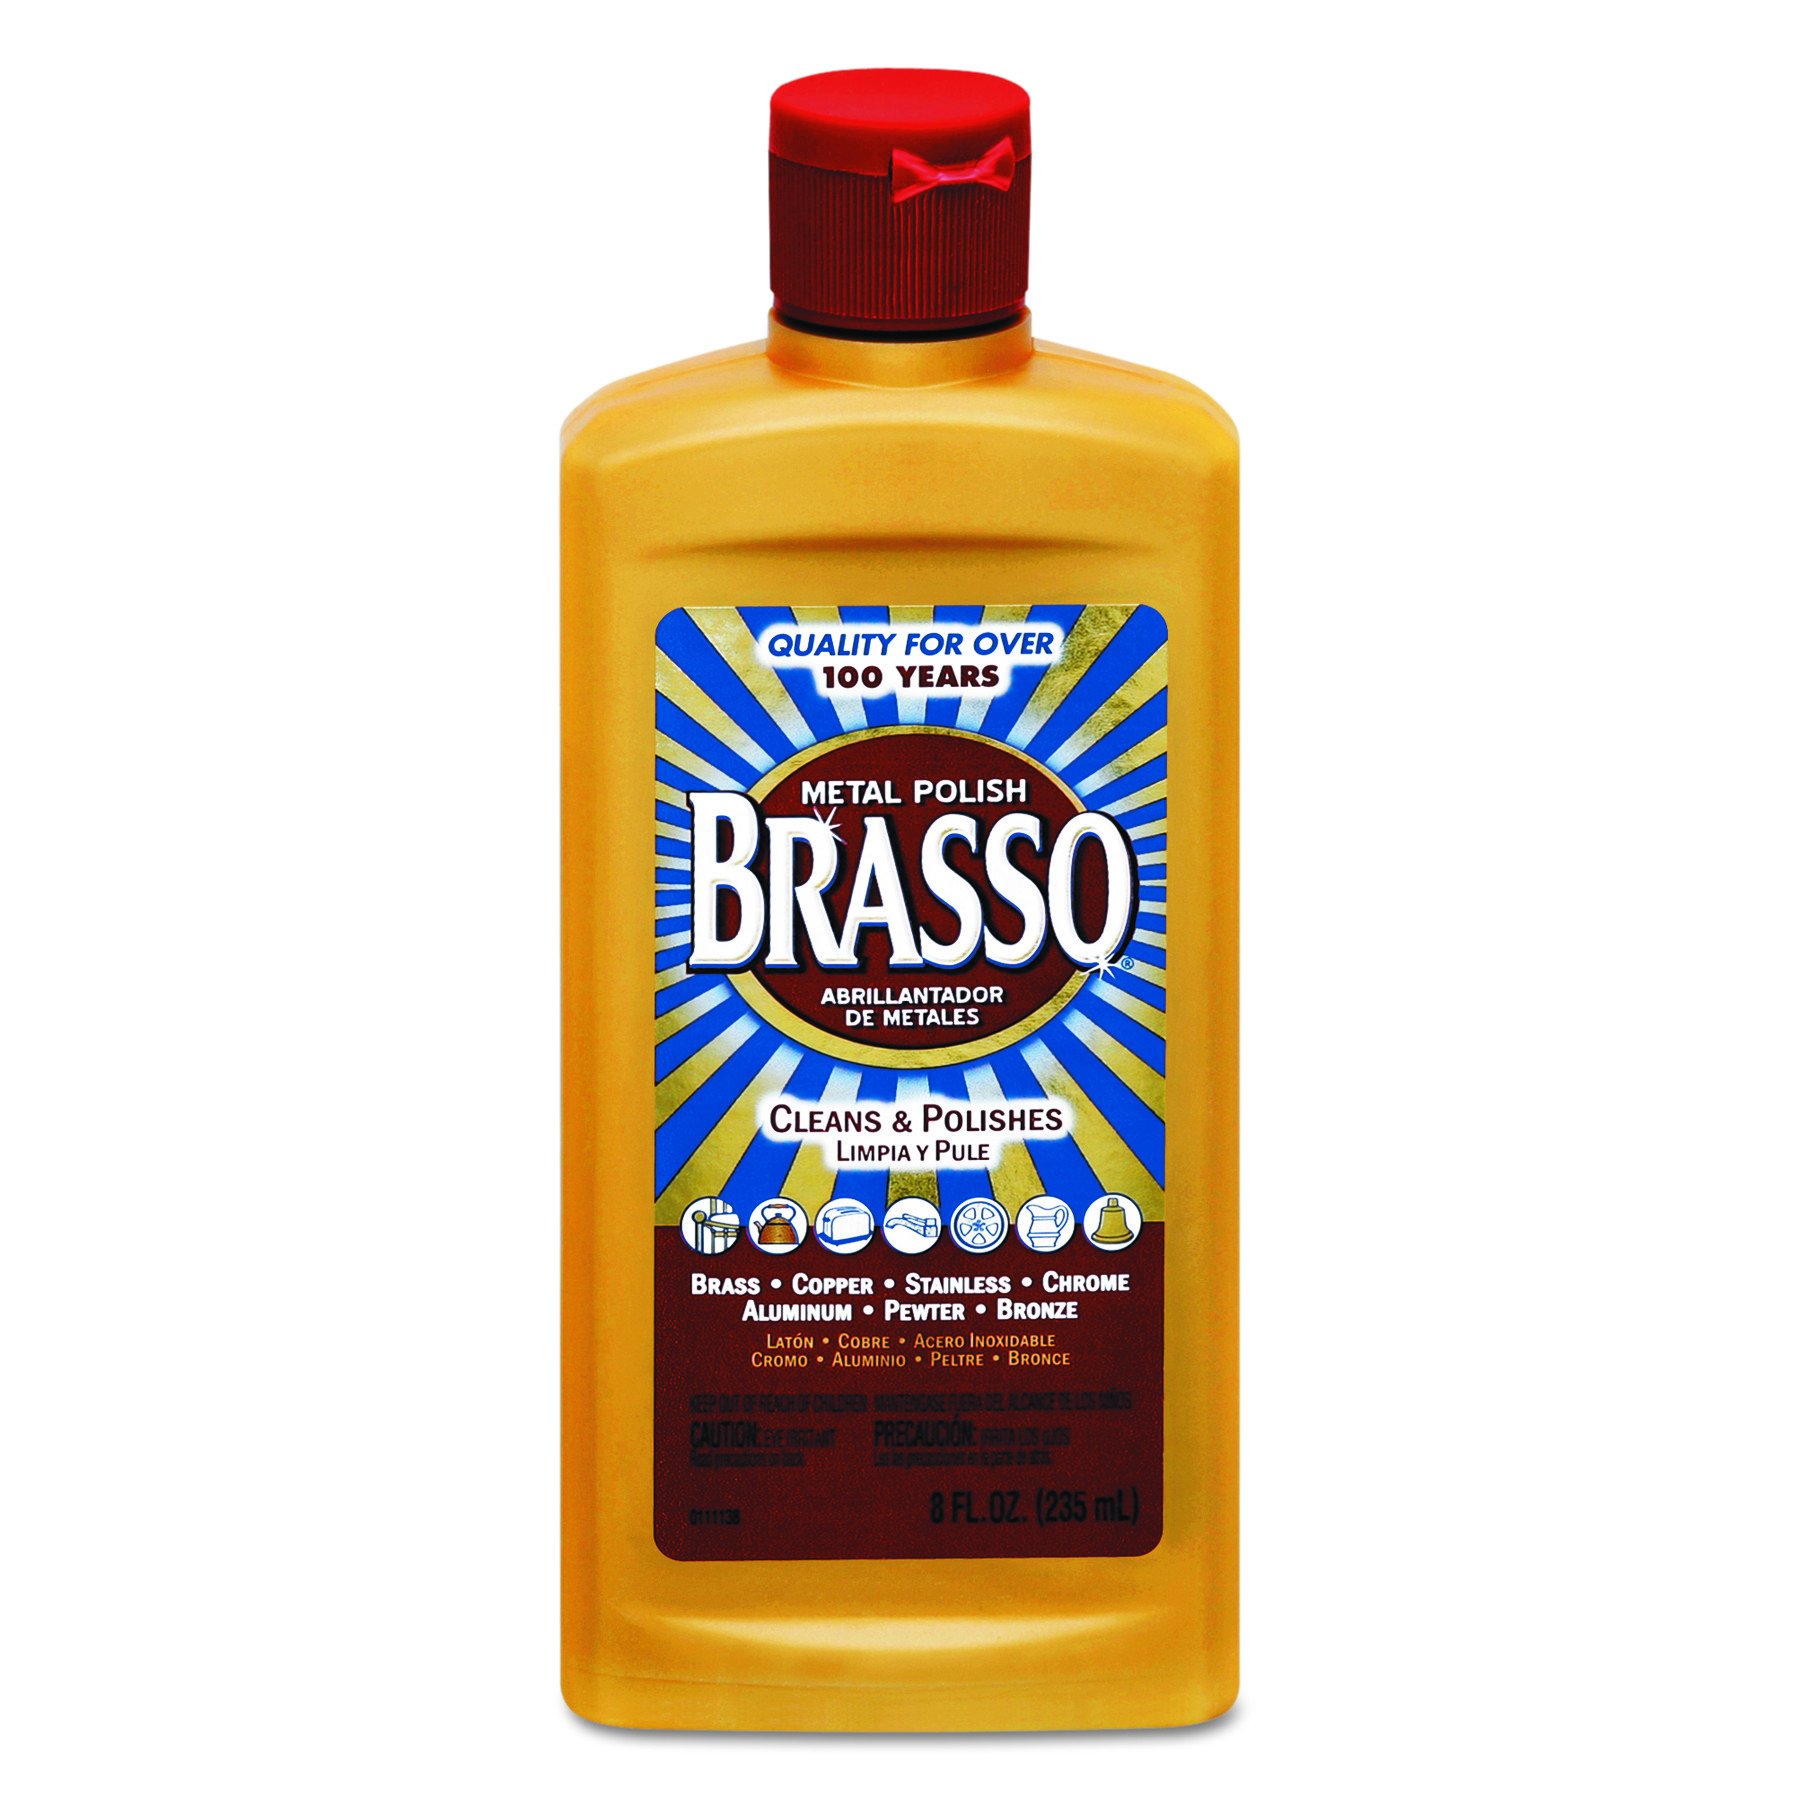 Brasso Metal Polish, 8 oz Bottle for Brass, Copper, Stainless, Chrome, Aluminum, Pewter & Bronze Pack of 8 - image 1 of 9